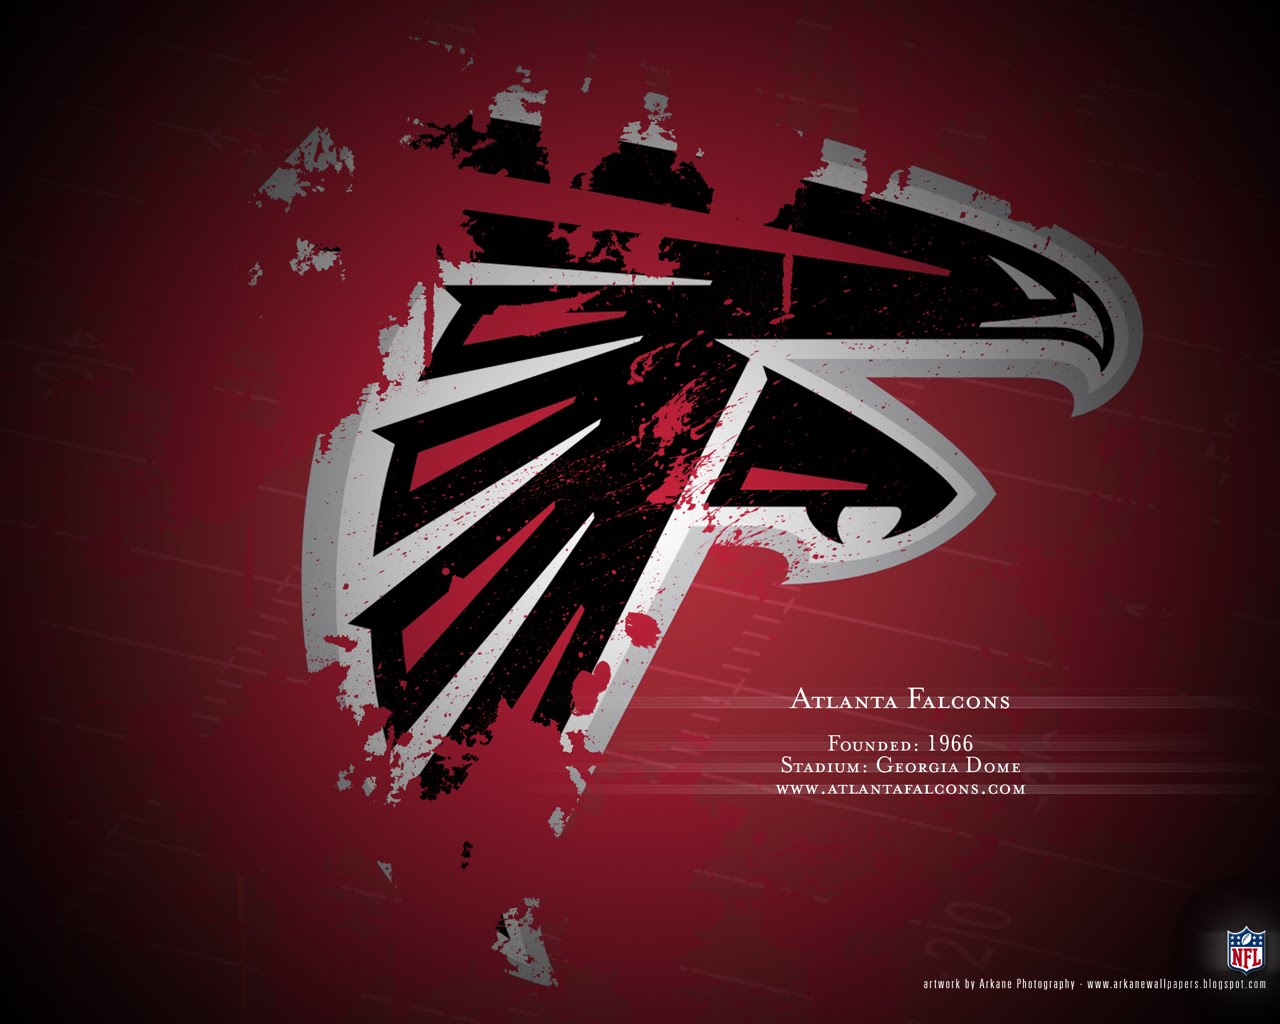 Download 'Atlanta Falcons' wallpapers for mobile phone, free